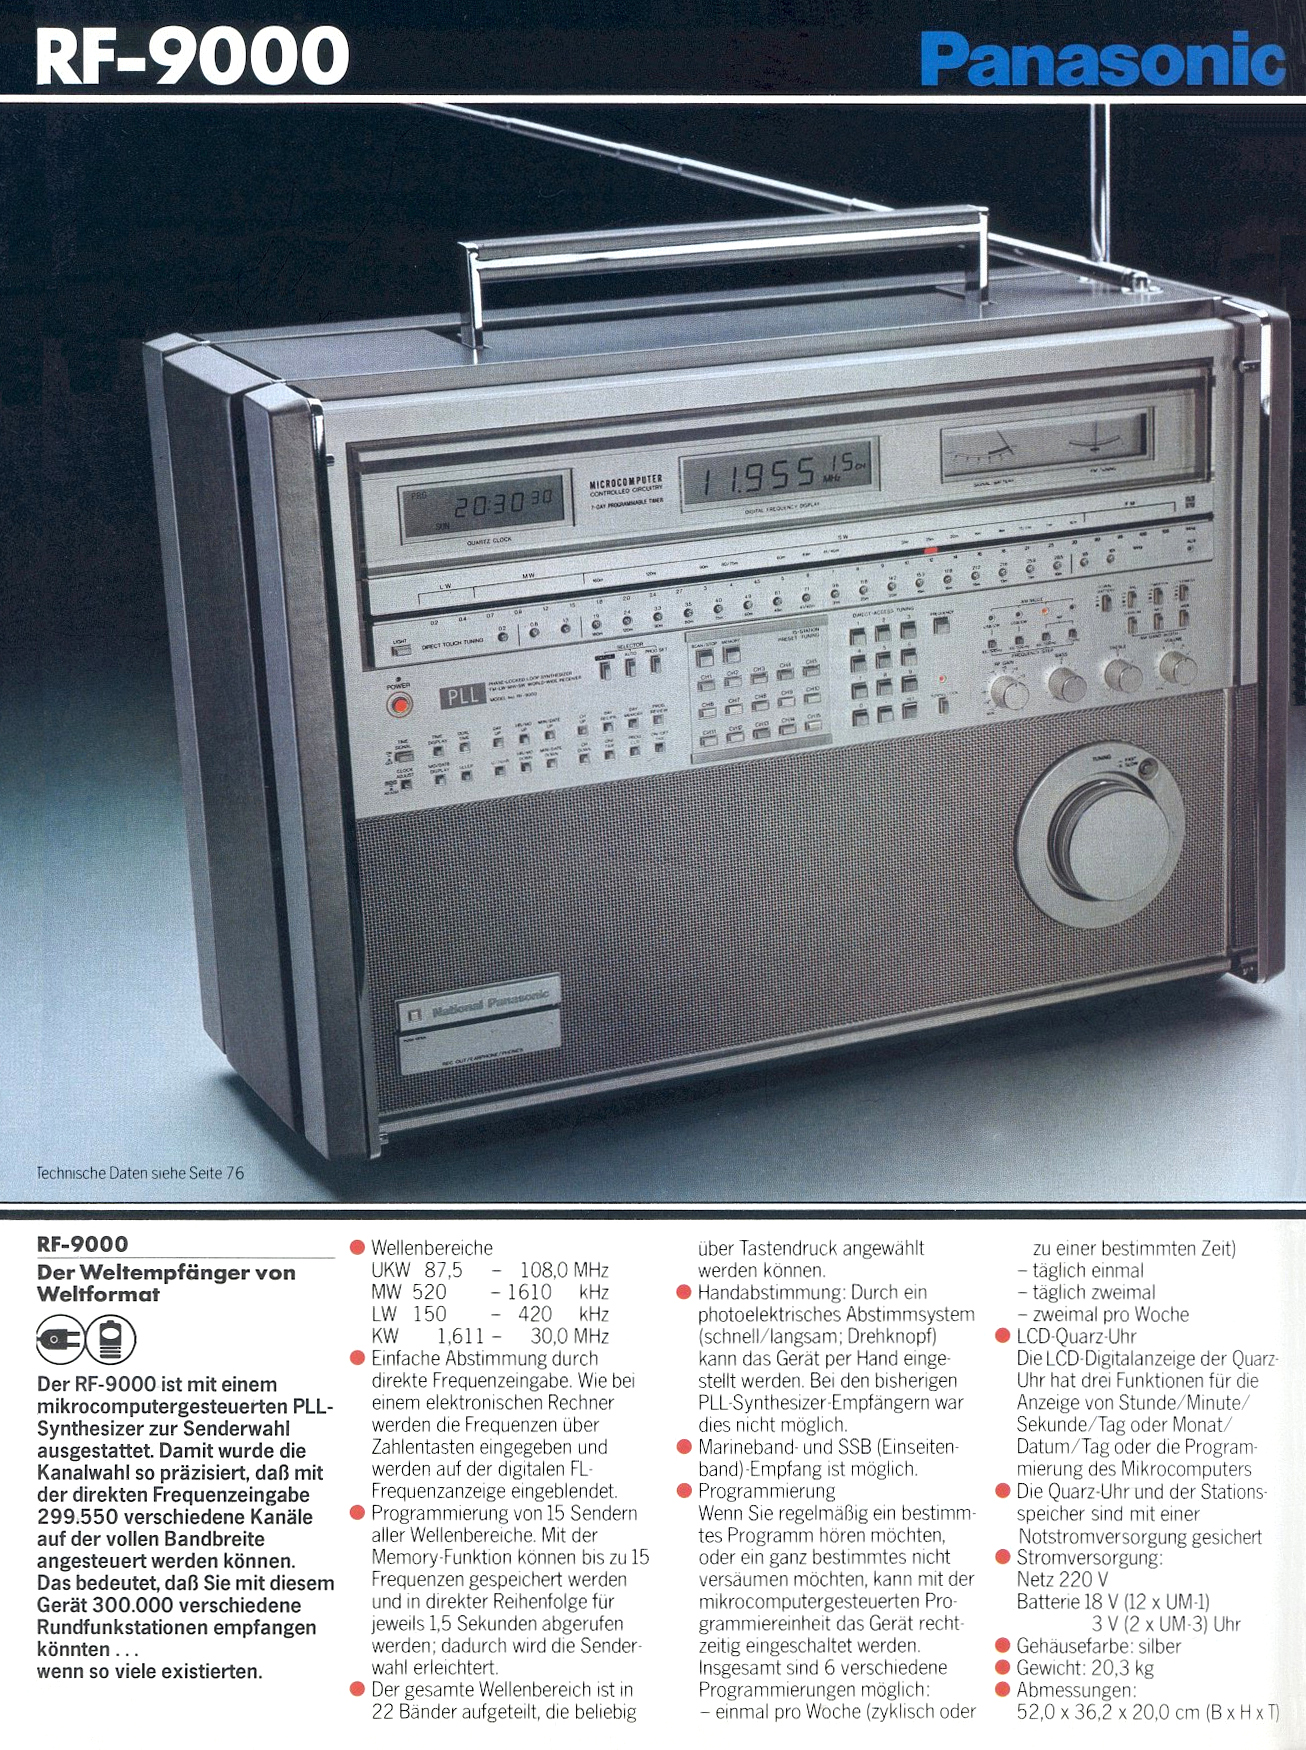 Panasonic RF-9000-Prospekt-1981.jpg